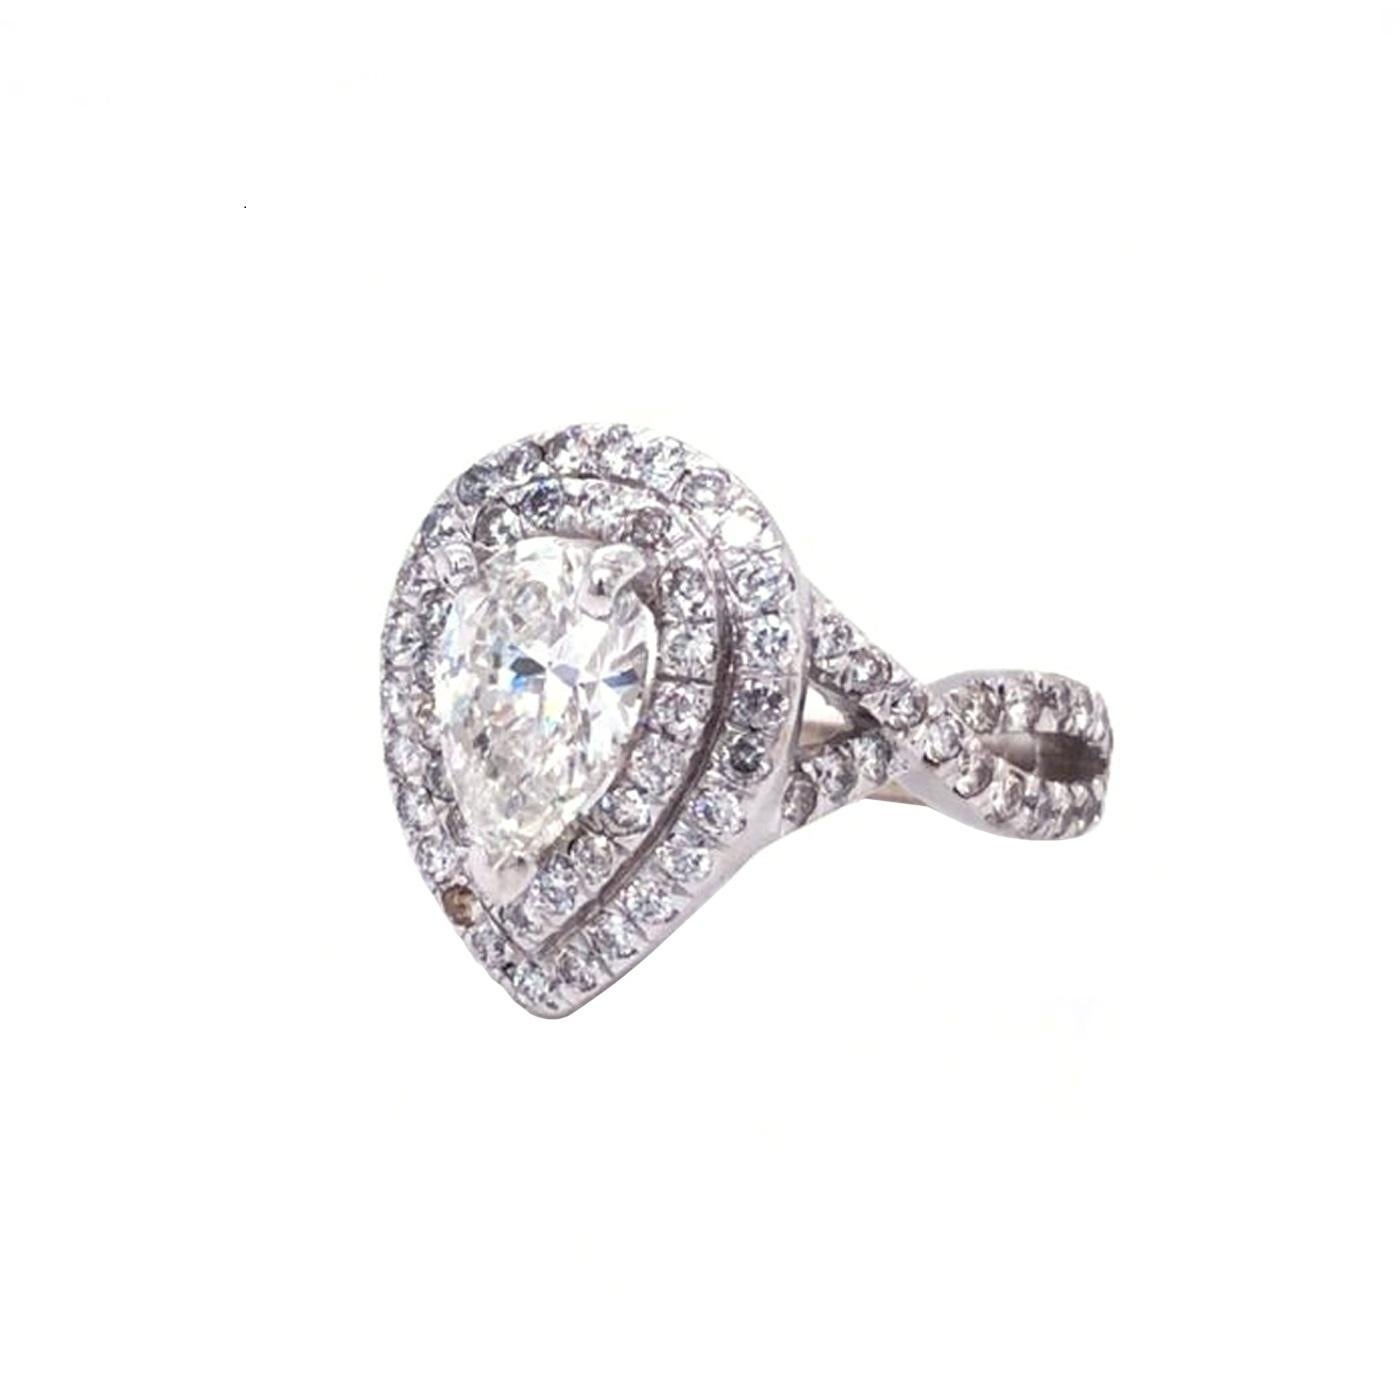 Modernist 1.28 Carat Center Pear Shape Diamond Ring 14K White Gold 3 Prongs Si2 Clarity For Sale